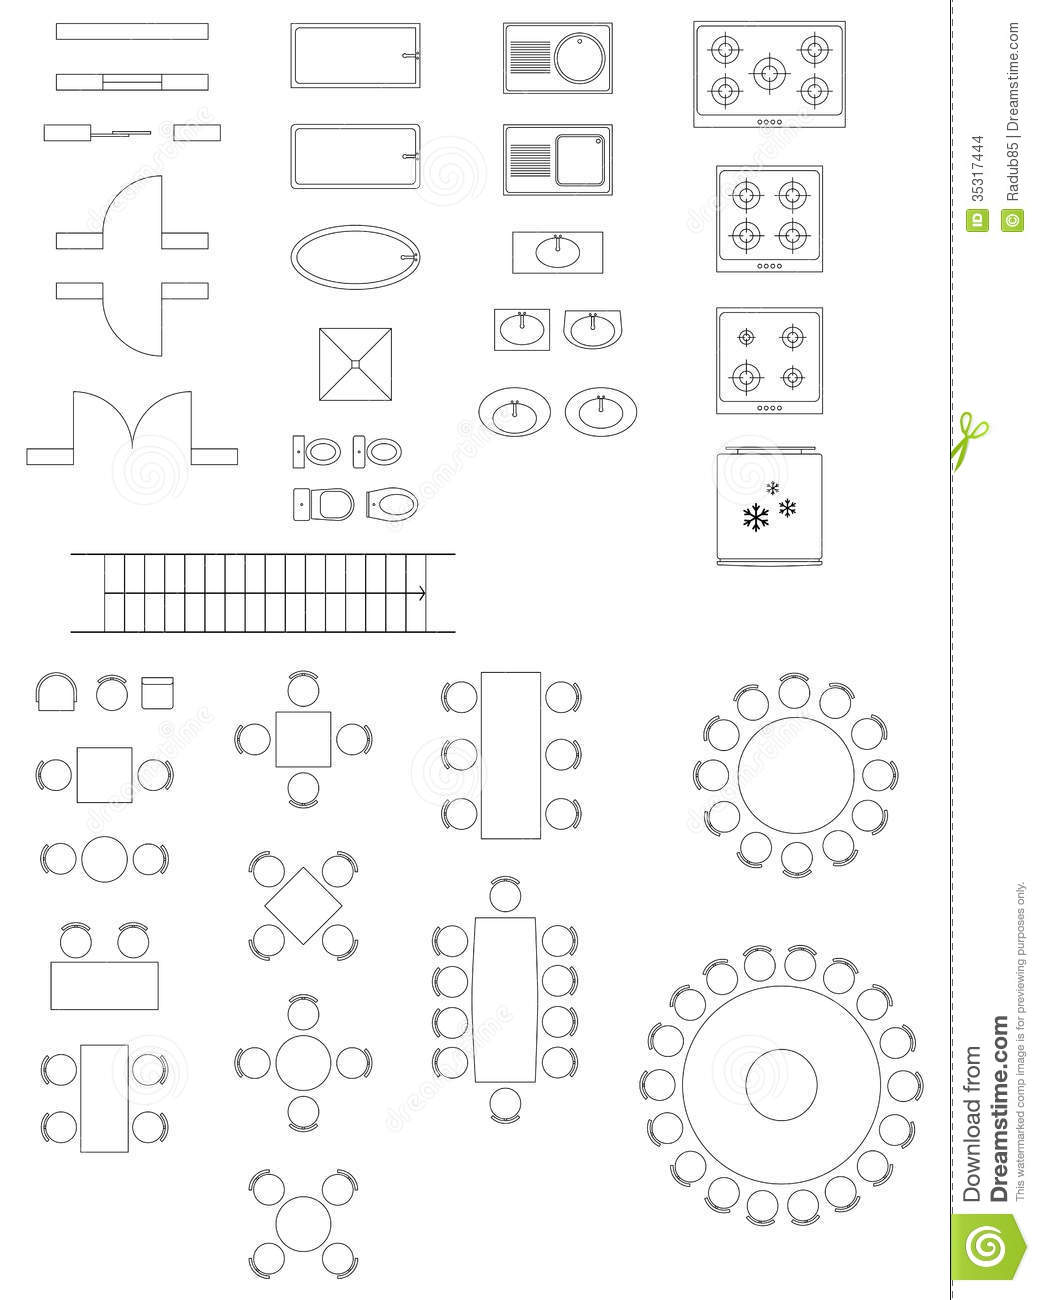 Standard Symbols Used Architecture Plans Icons Set Vector Illustration